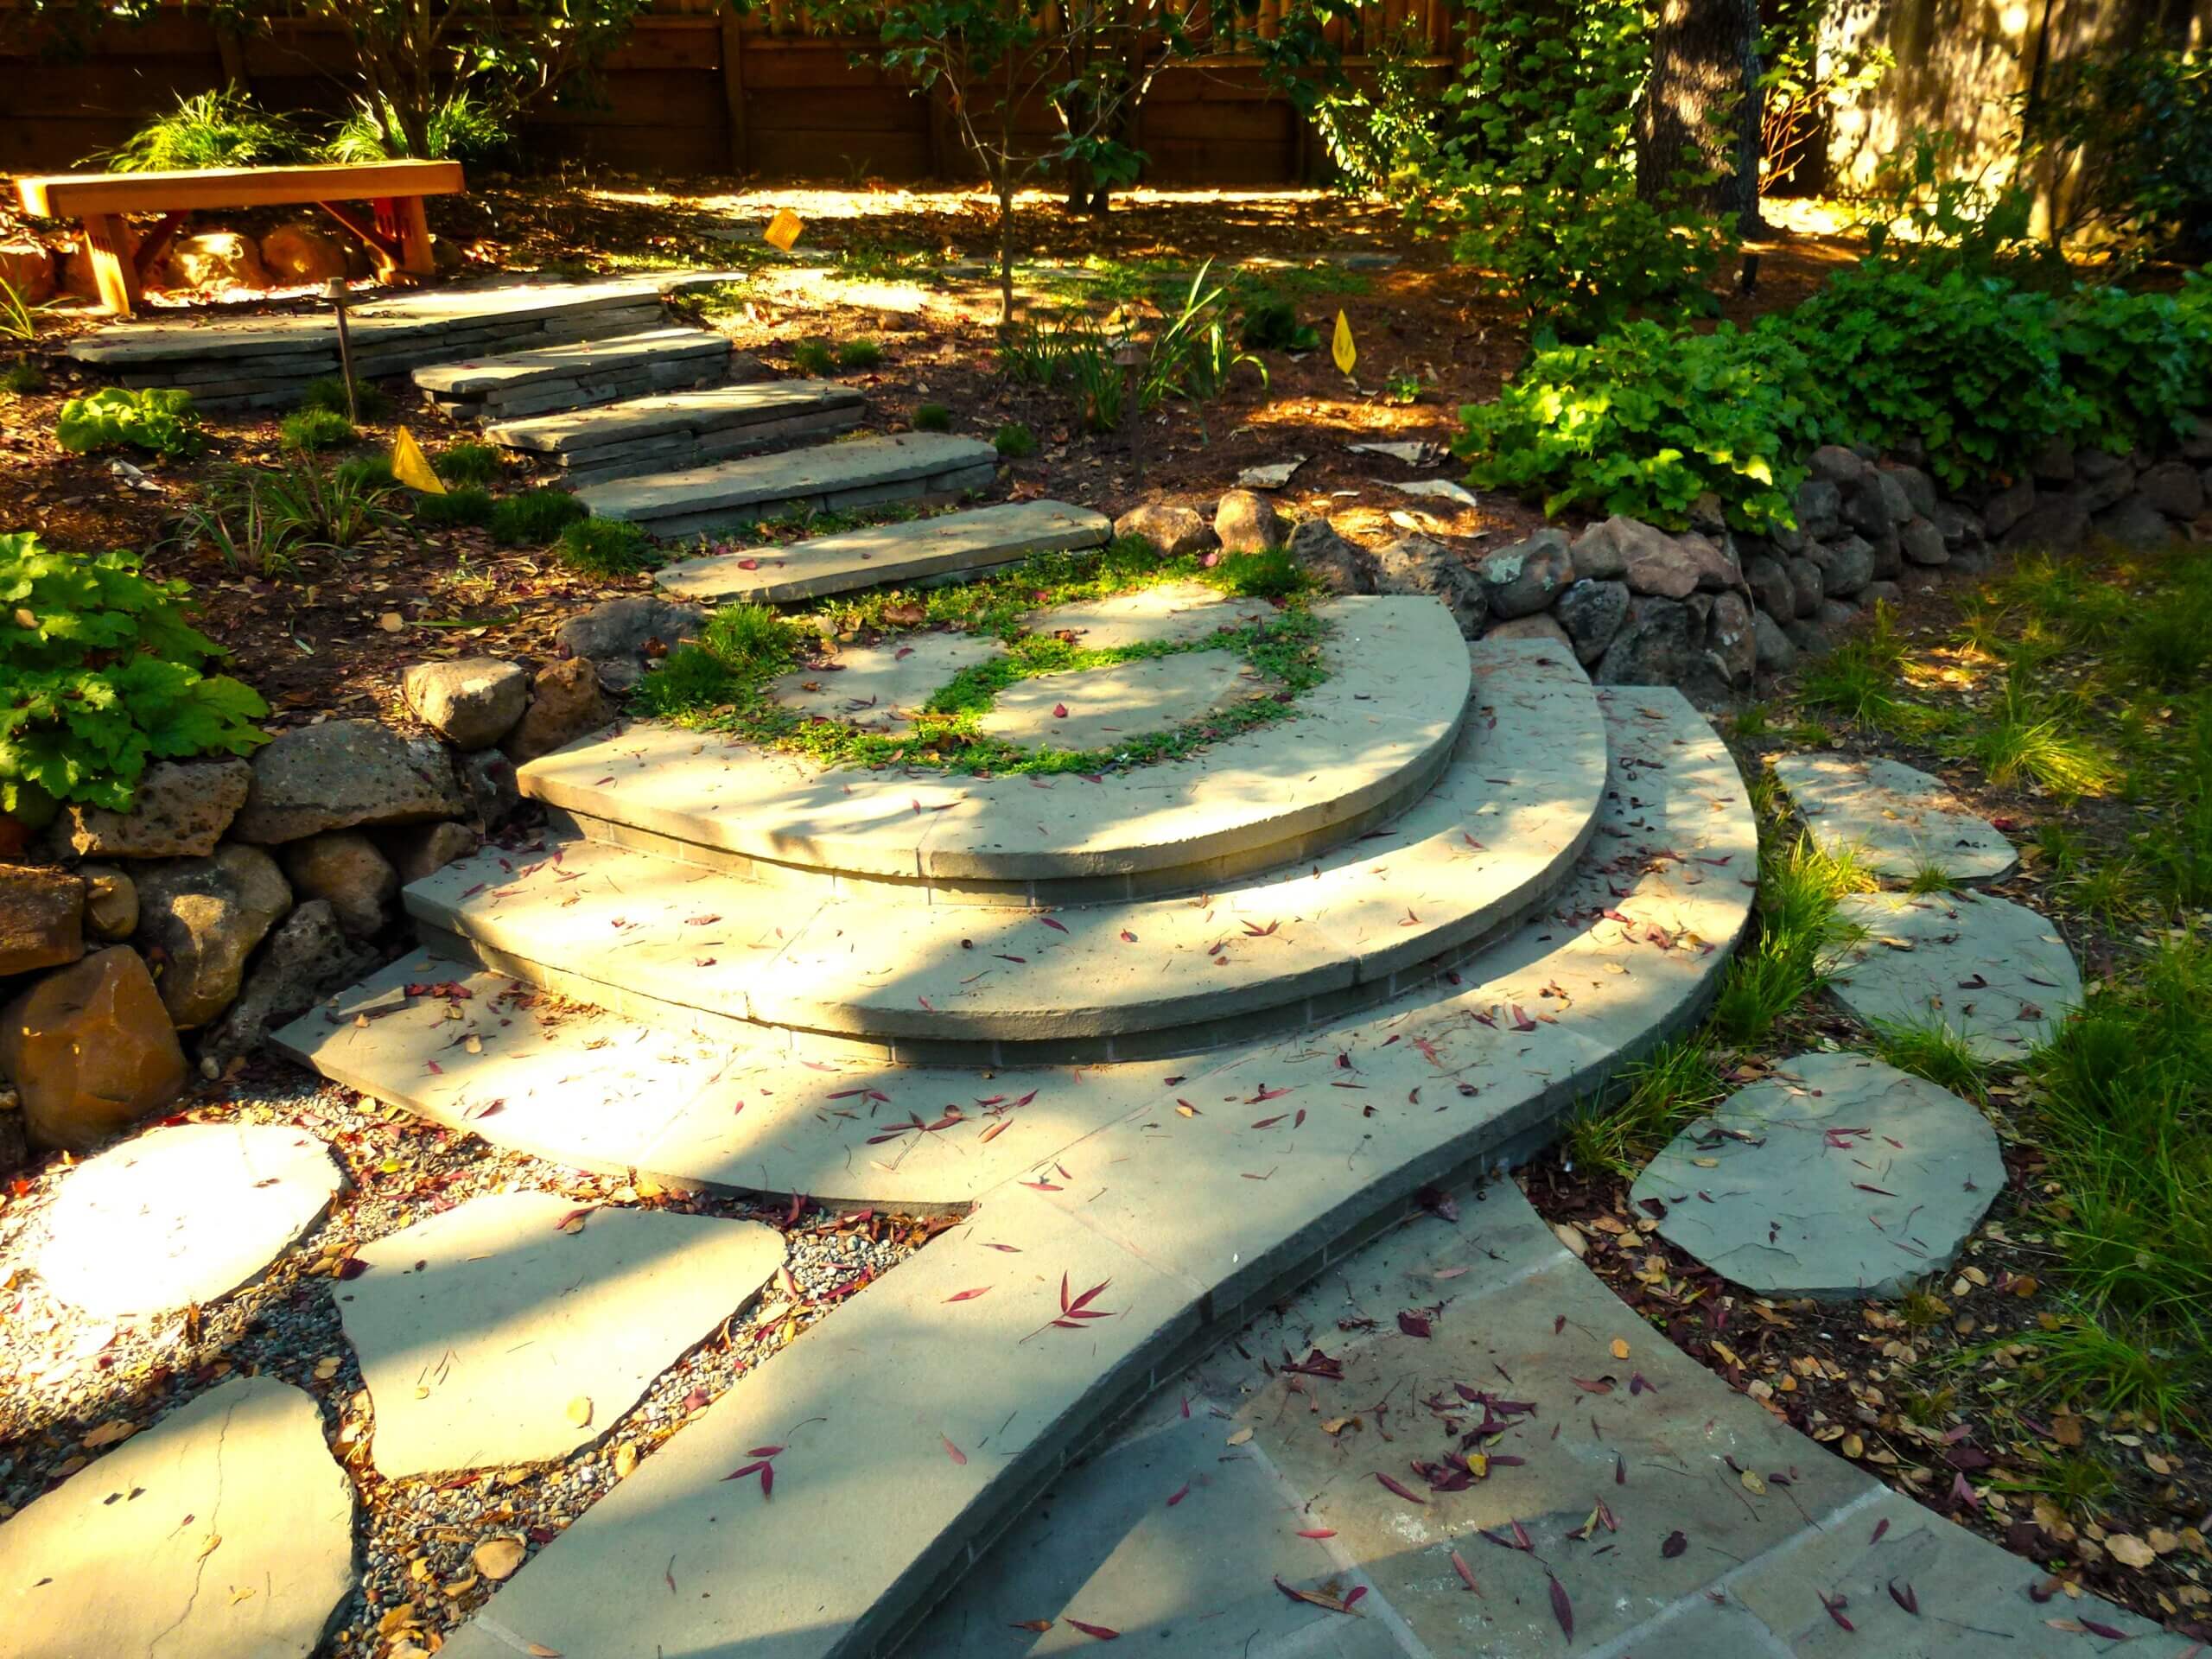 Custom stone steps mixing irregular shaped stone with sleek modern stone leading to backyard seating area